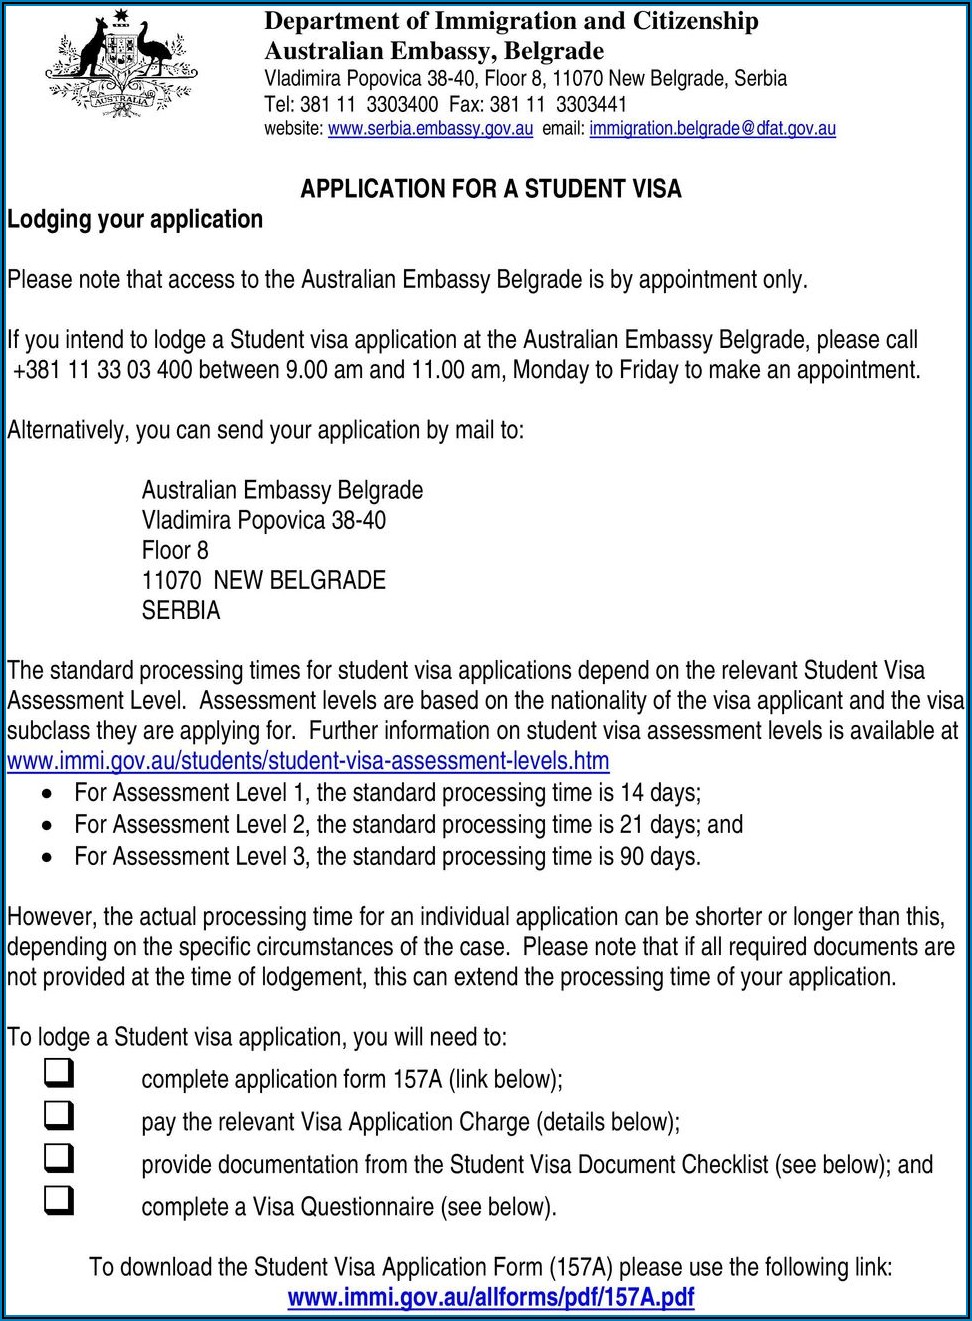 How To Fill Australian Student Visa Application Form